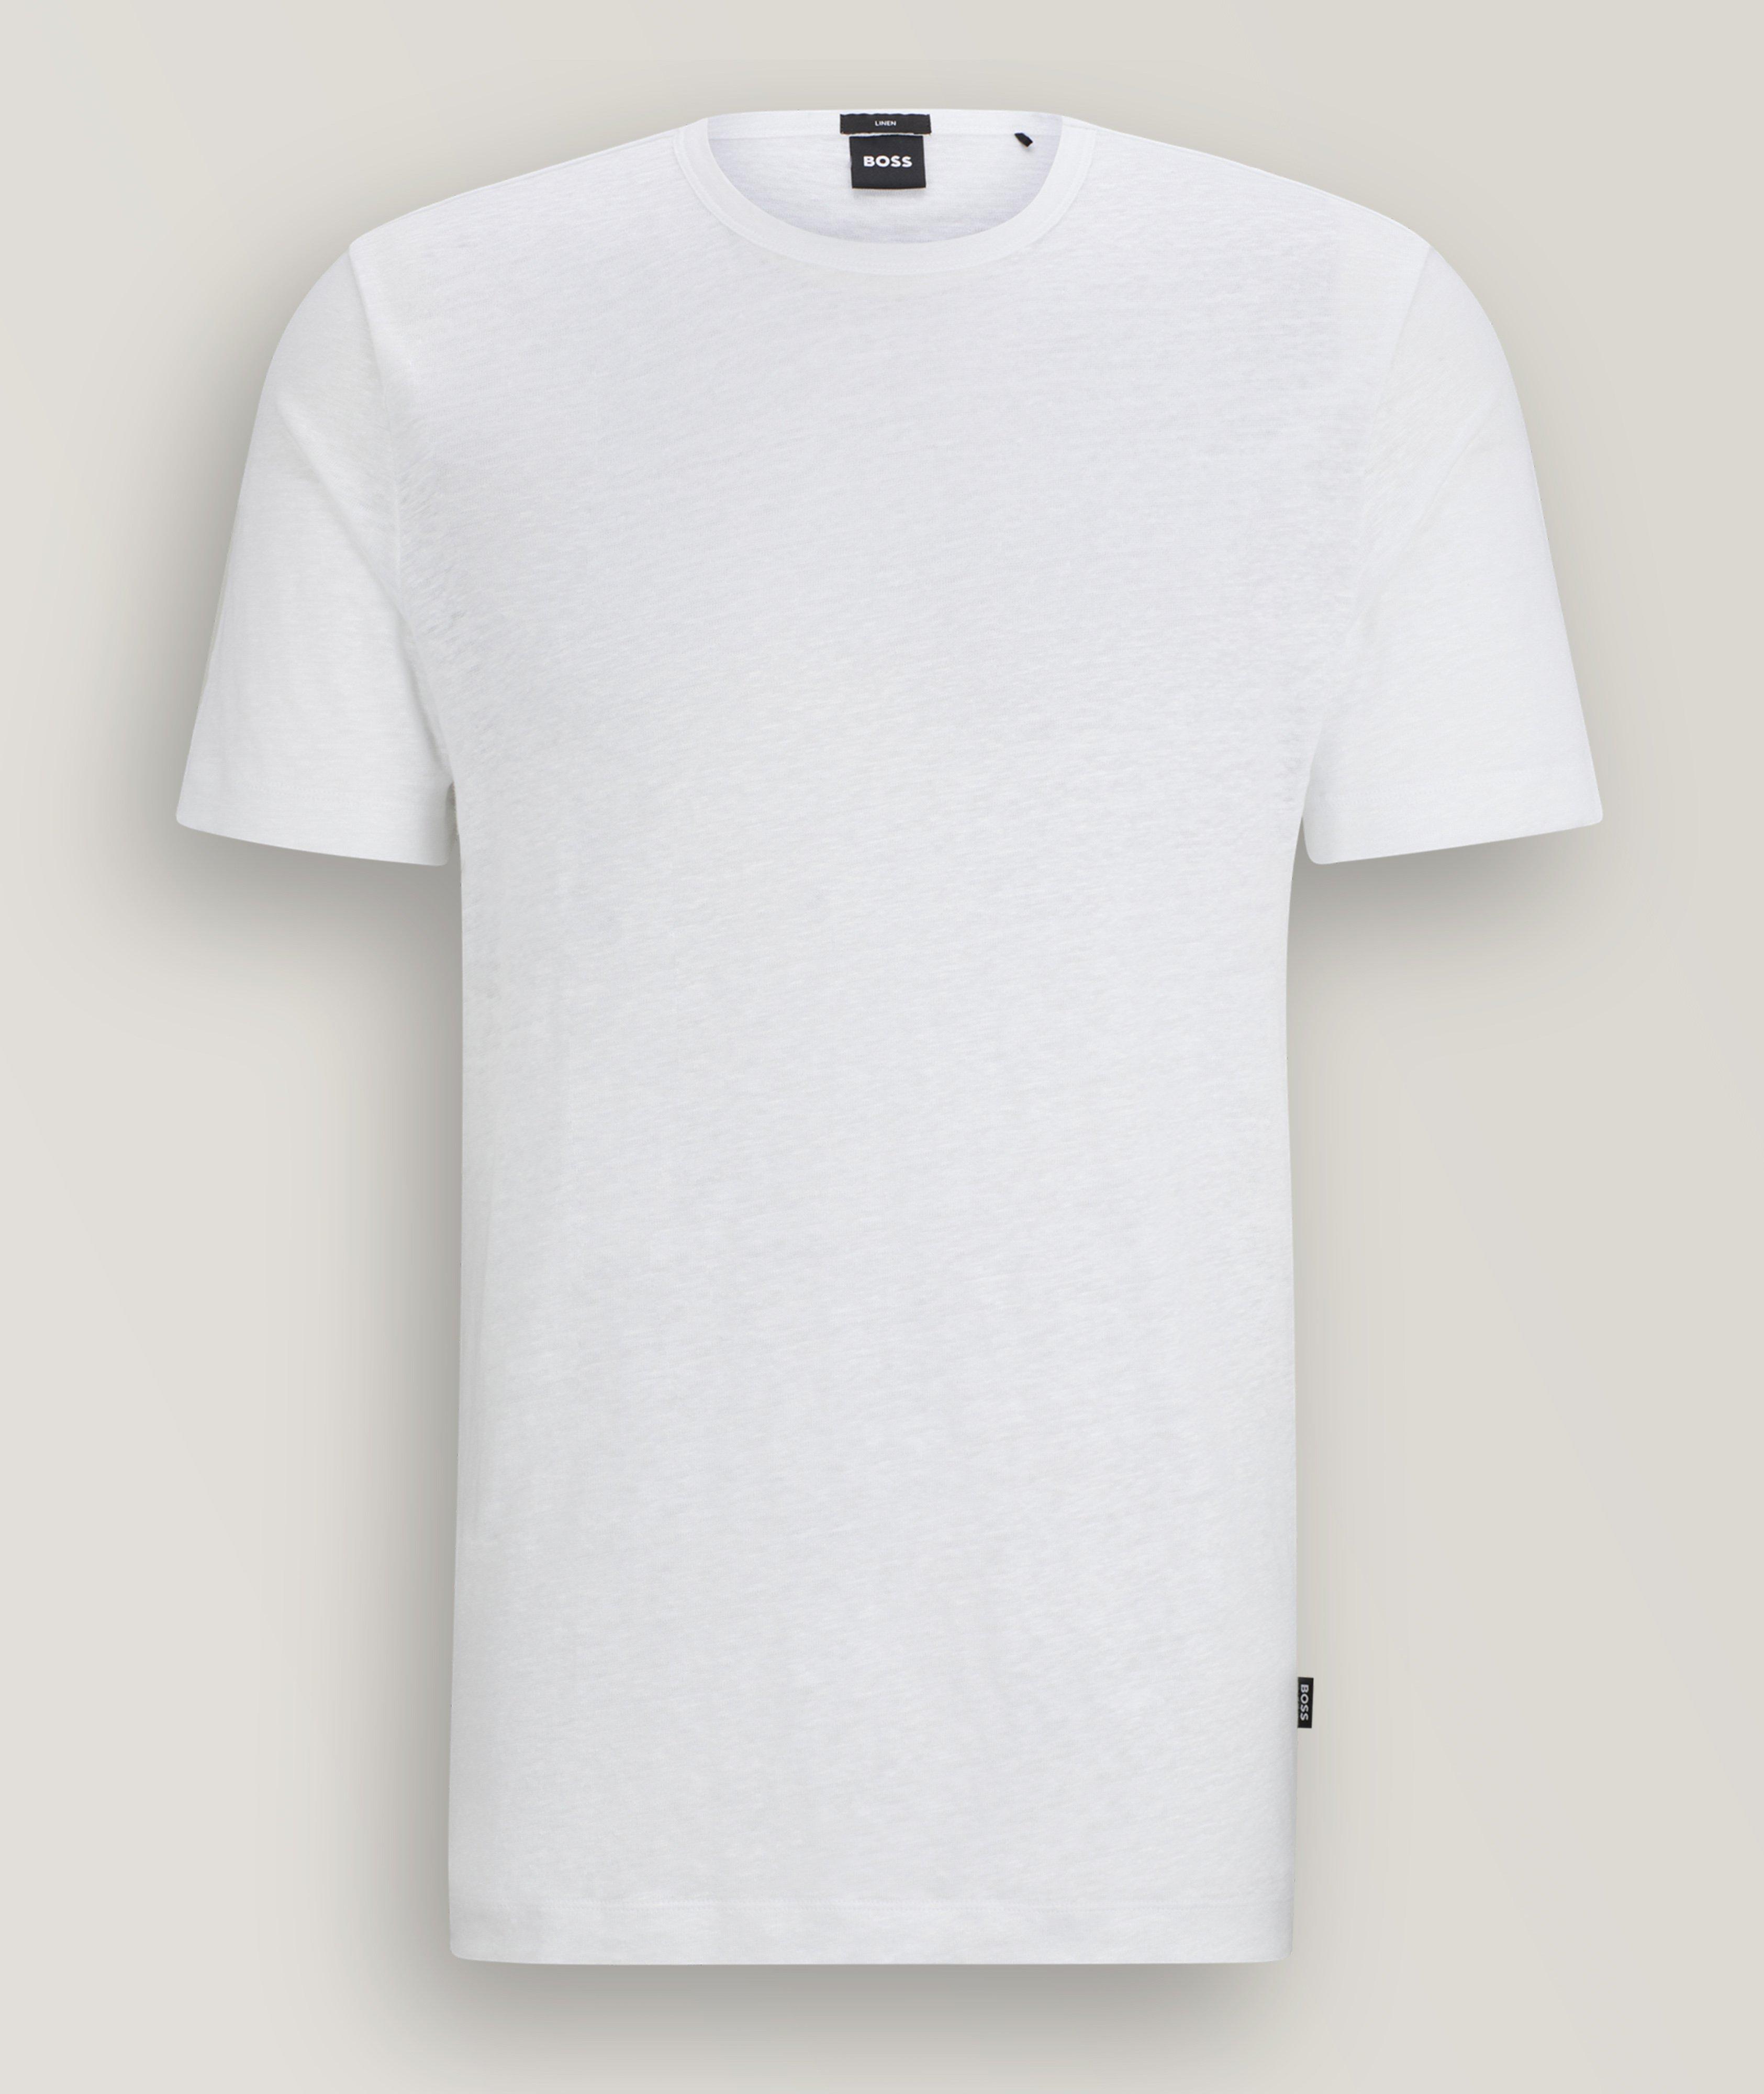 Black Performance Responsible Linen T-Shirt image 0